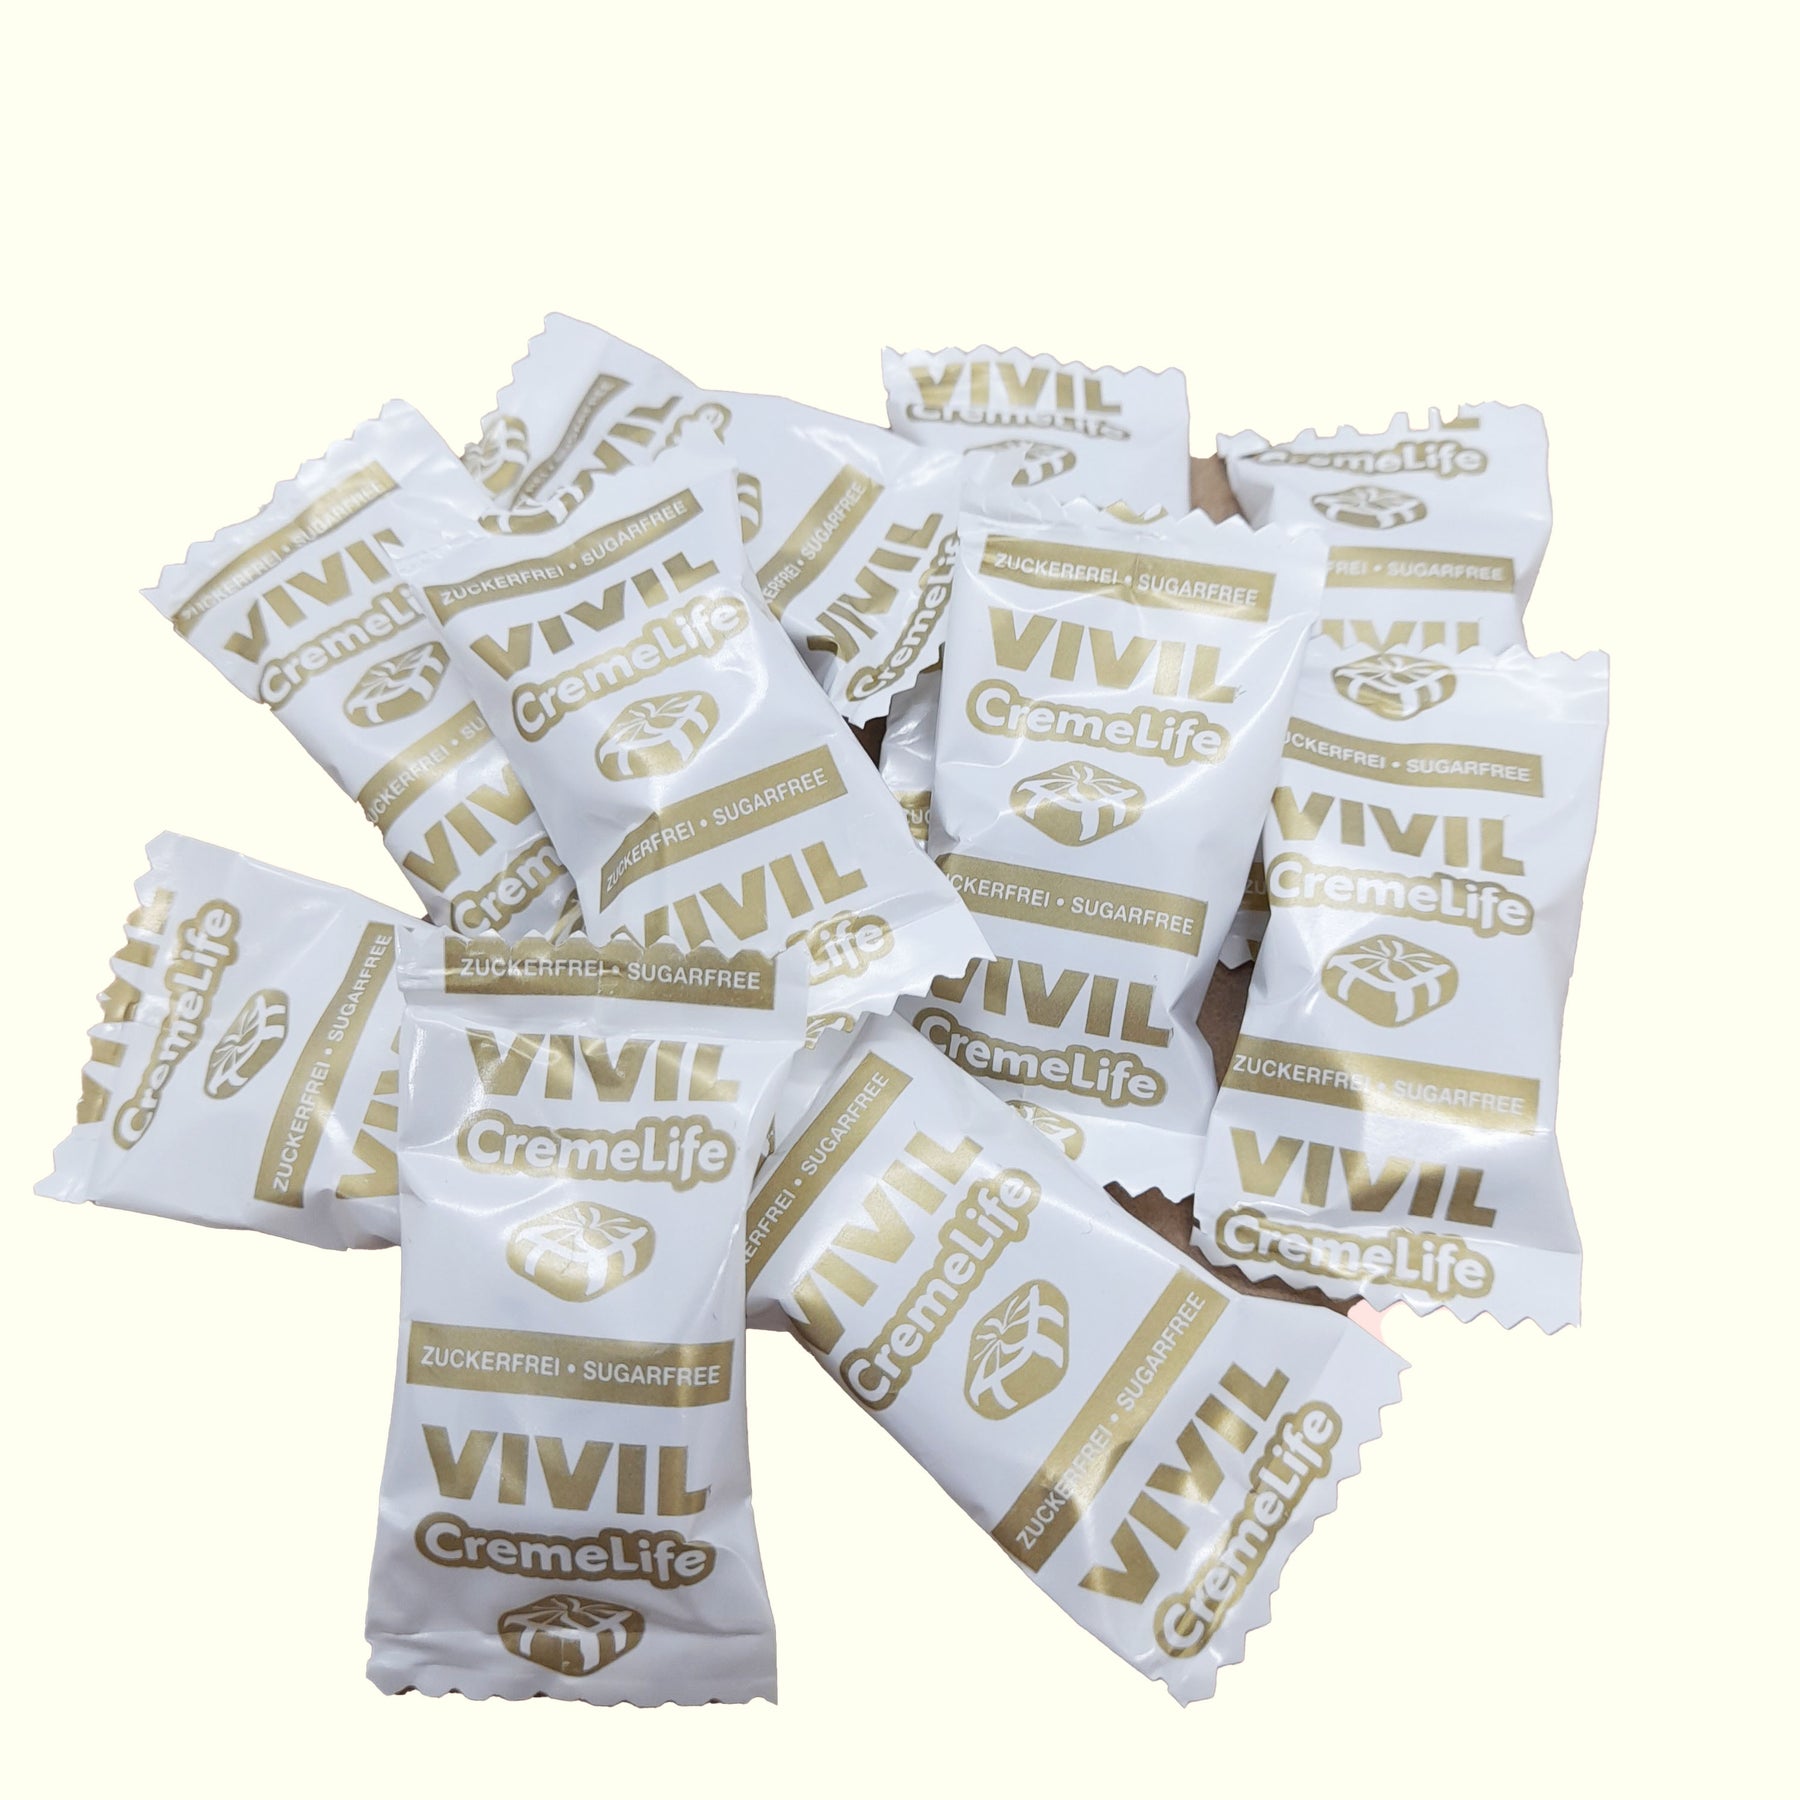 Vivil Creme Life Caramel Hazelitos zuckerfrei - 110g